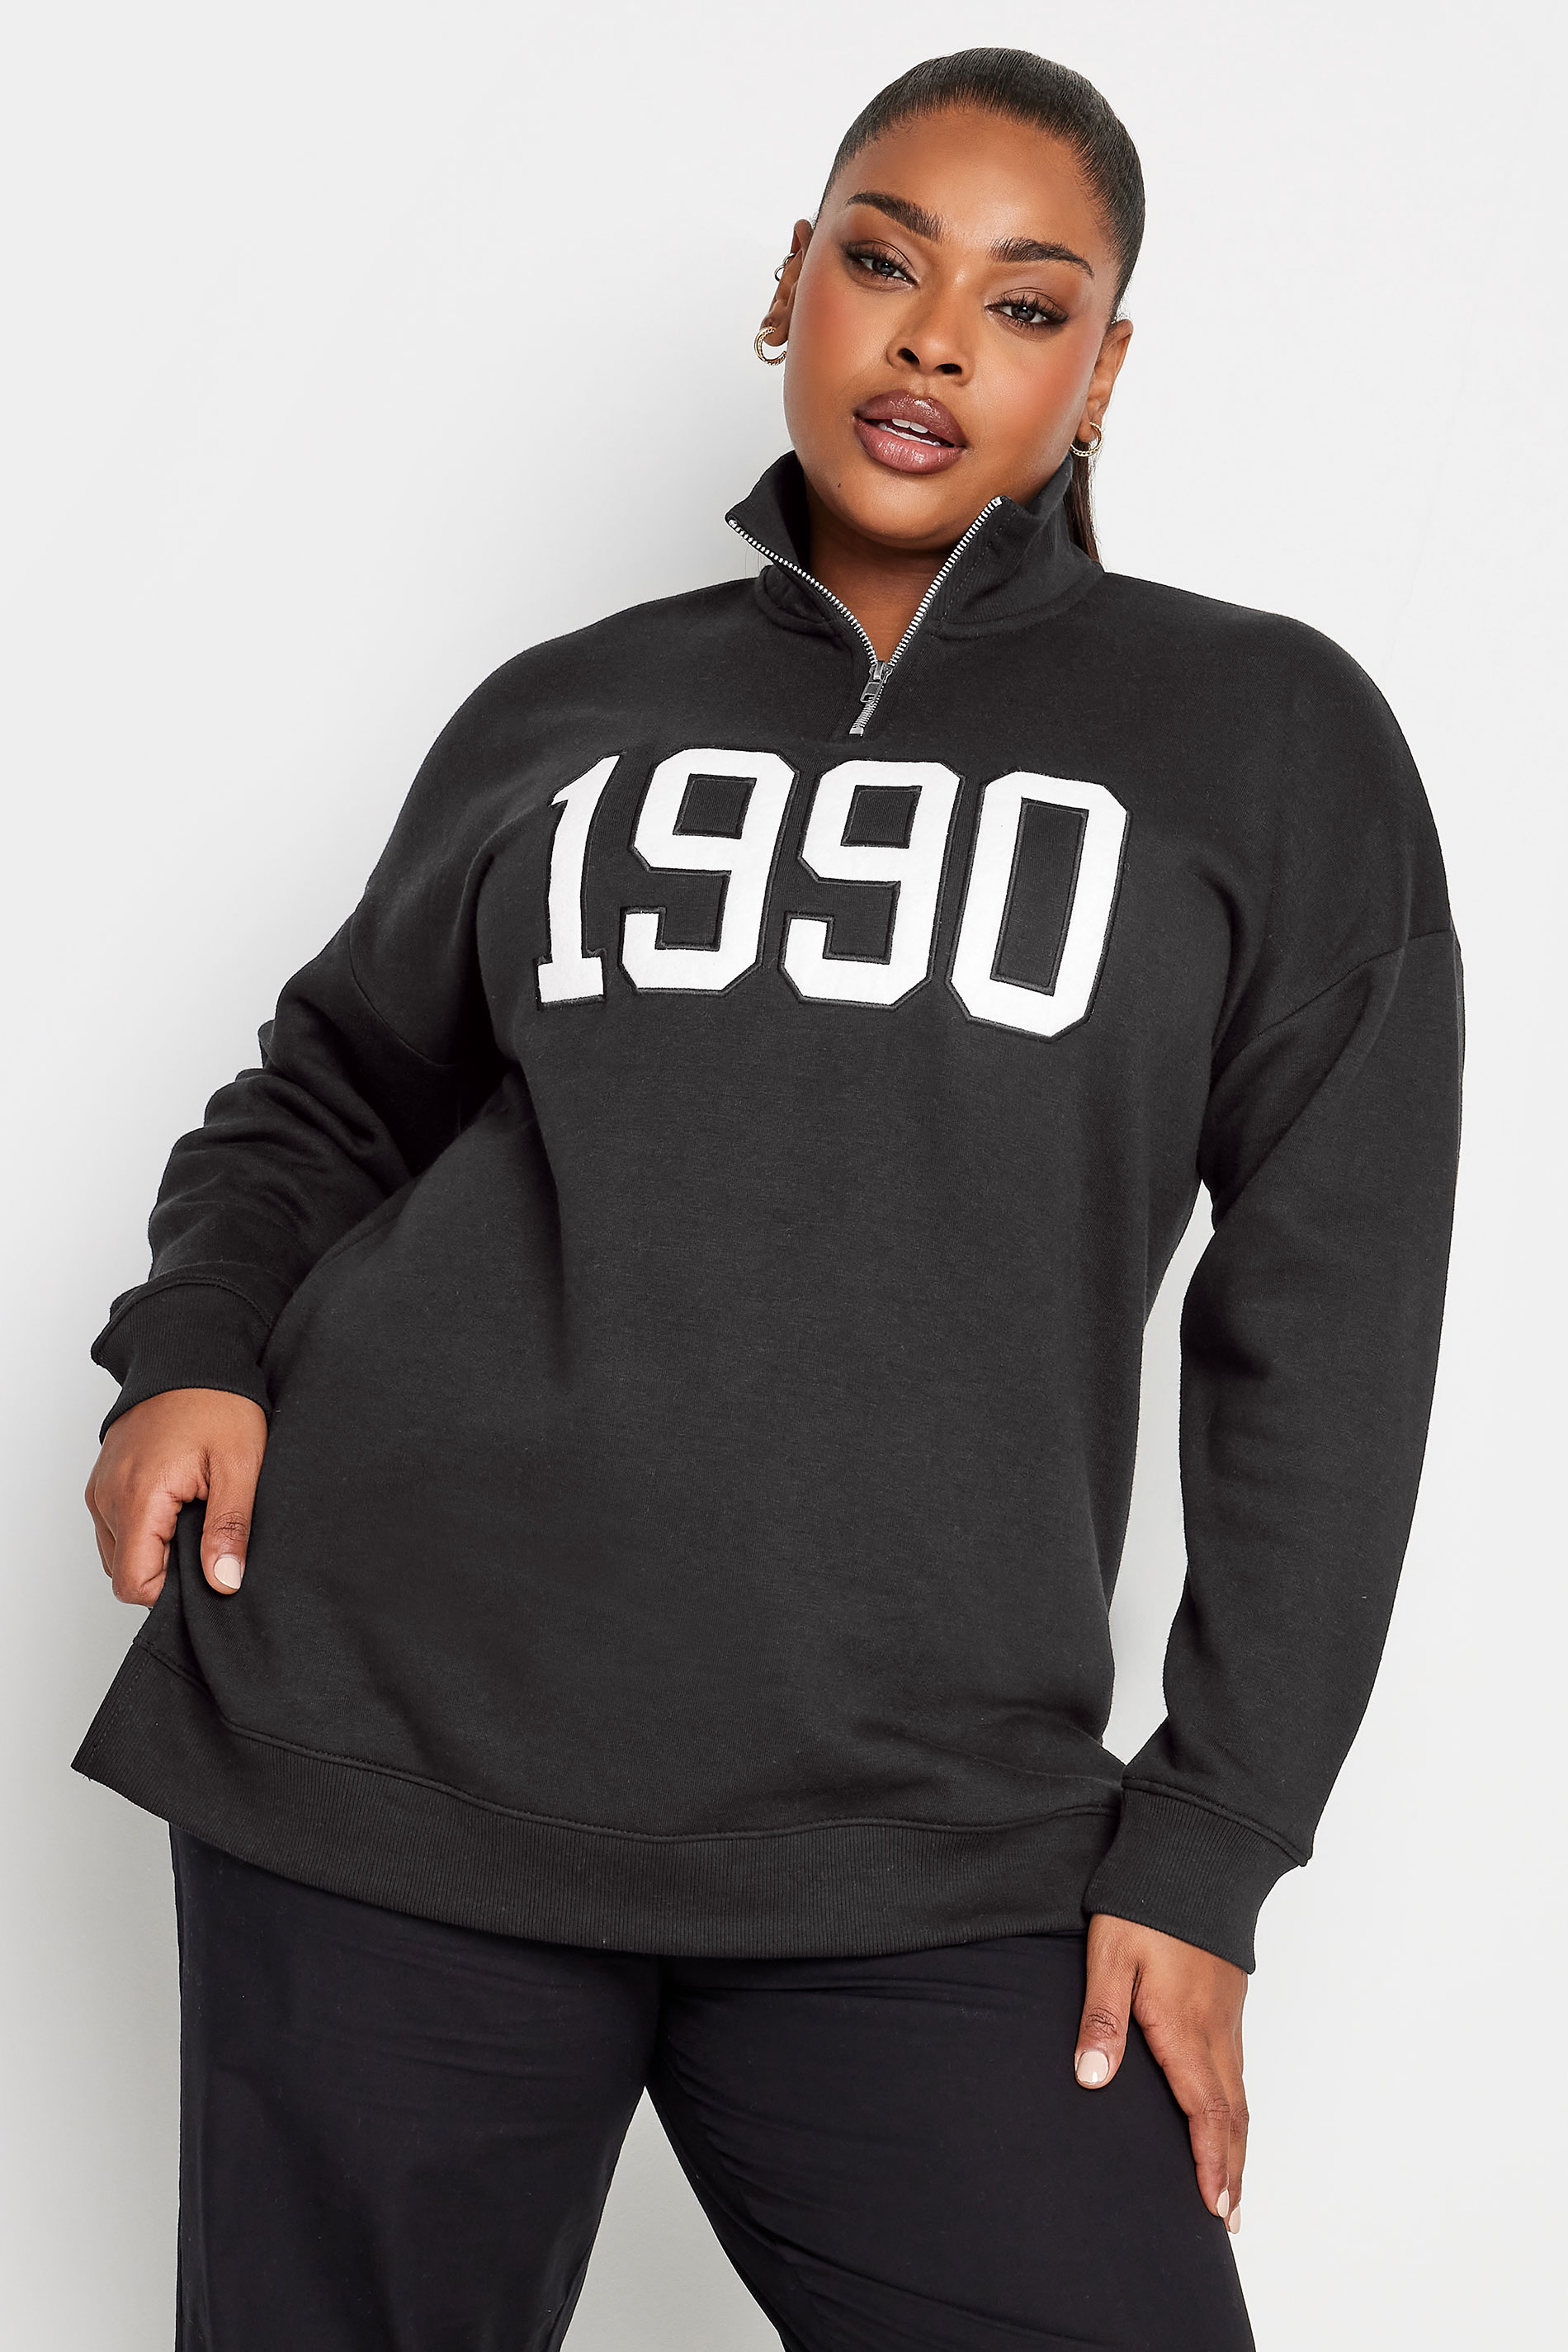 YOURS Plus Size Black '1990' Quarter Zip Sweatshirt | Yours Clothing 1